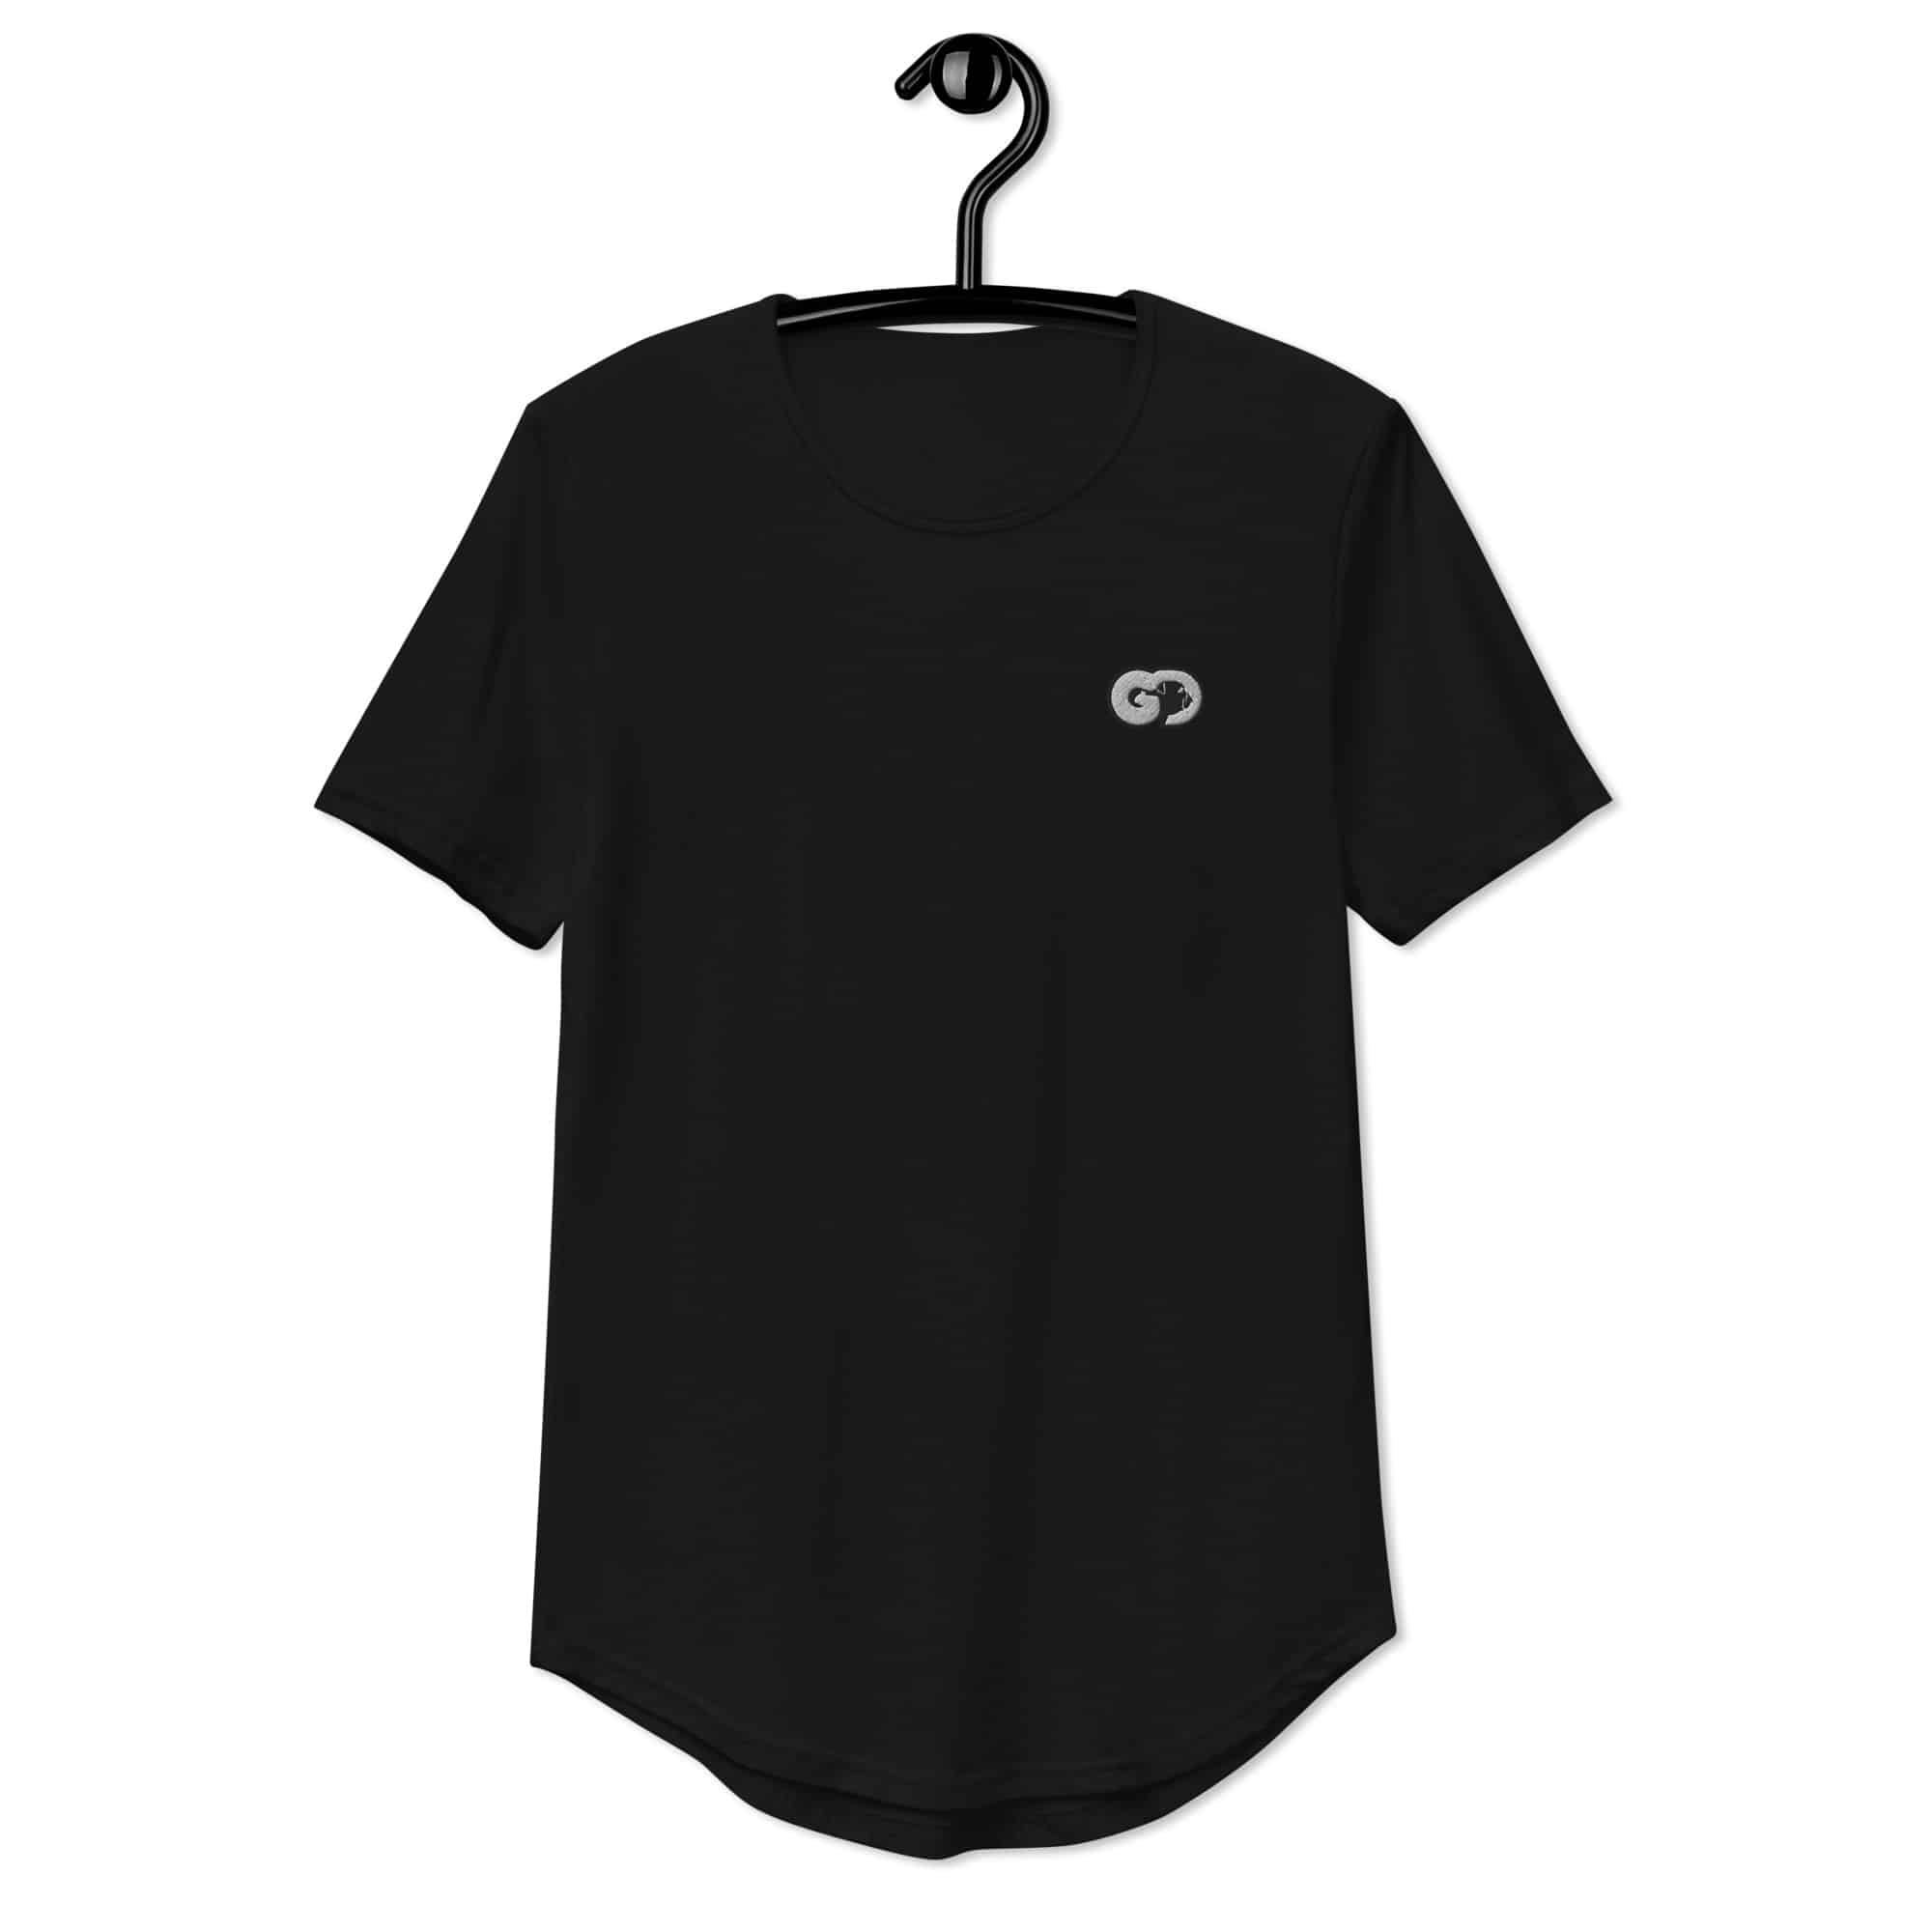 mens-curved-hem-t-shirt-black-front-6420aa3221df2.jpg